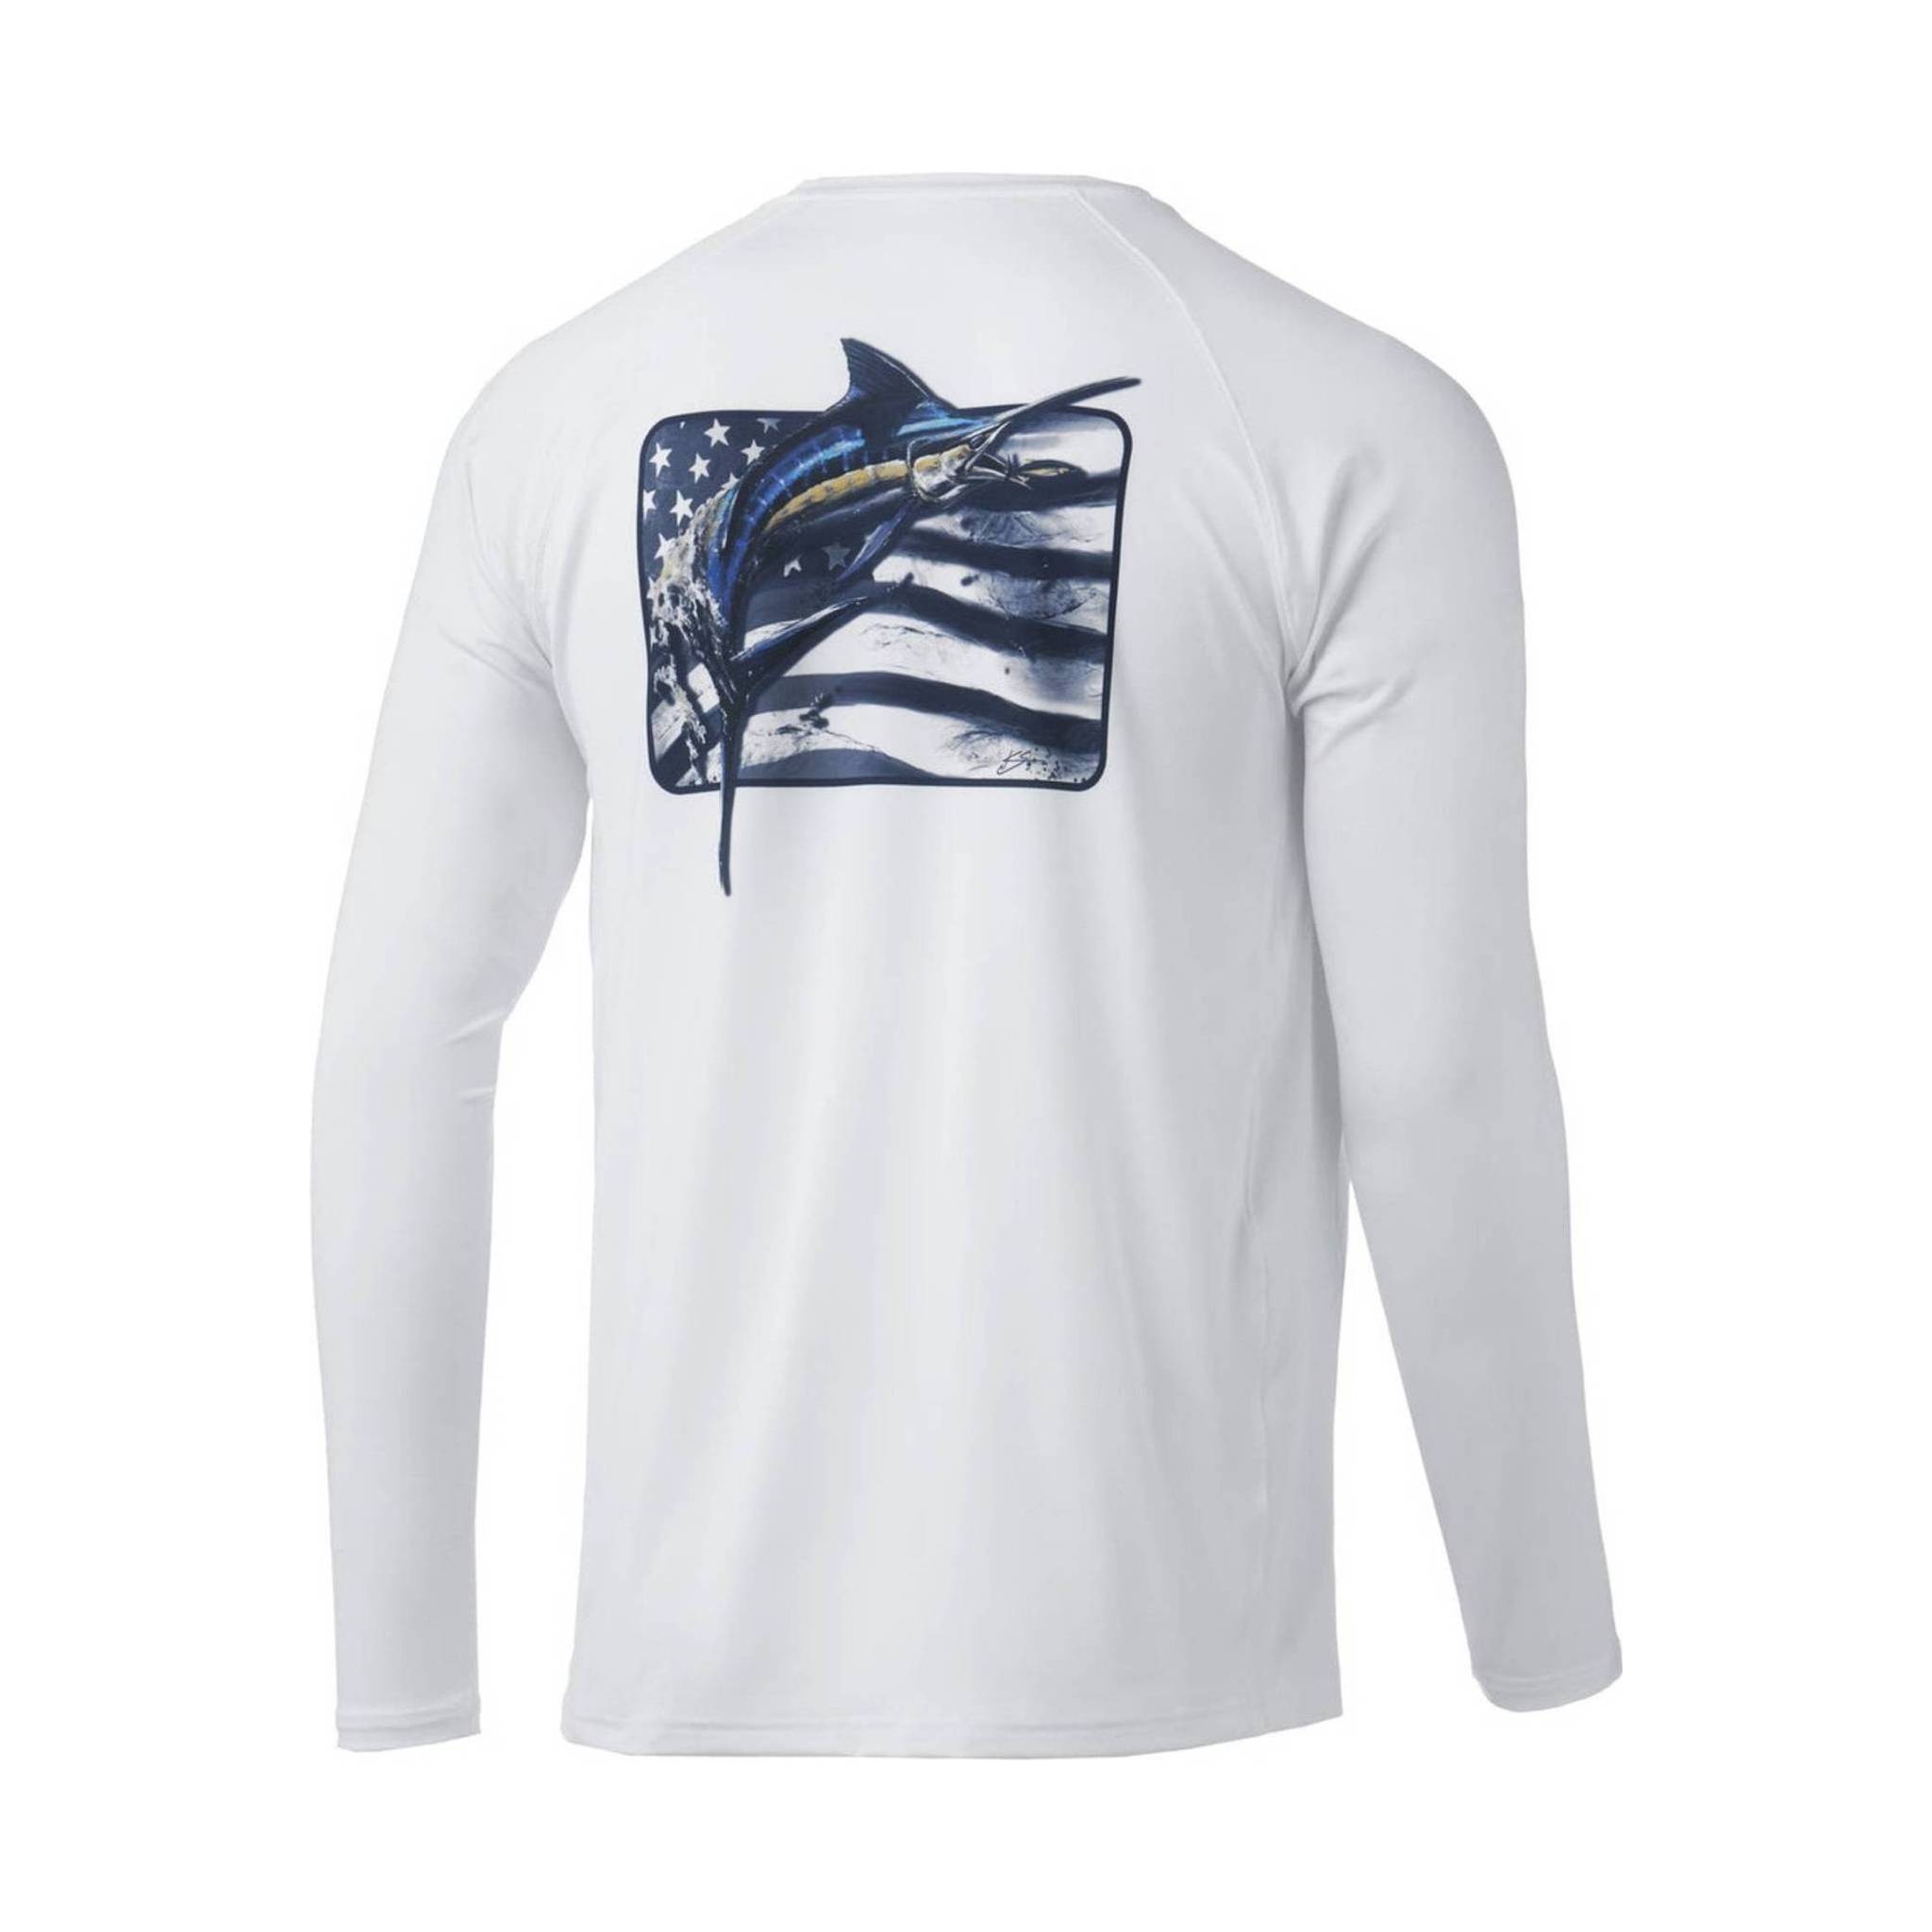 Huk Men's Americana Sushi Pursuit Long Sleeve Shirt - White/Blue 2XL / White